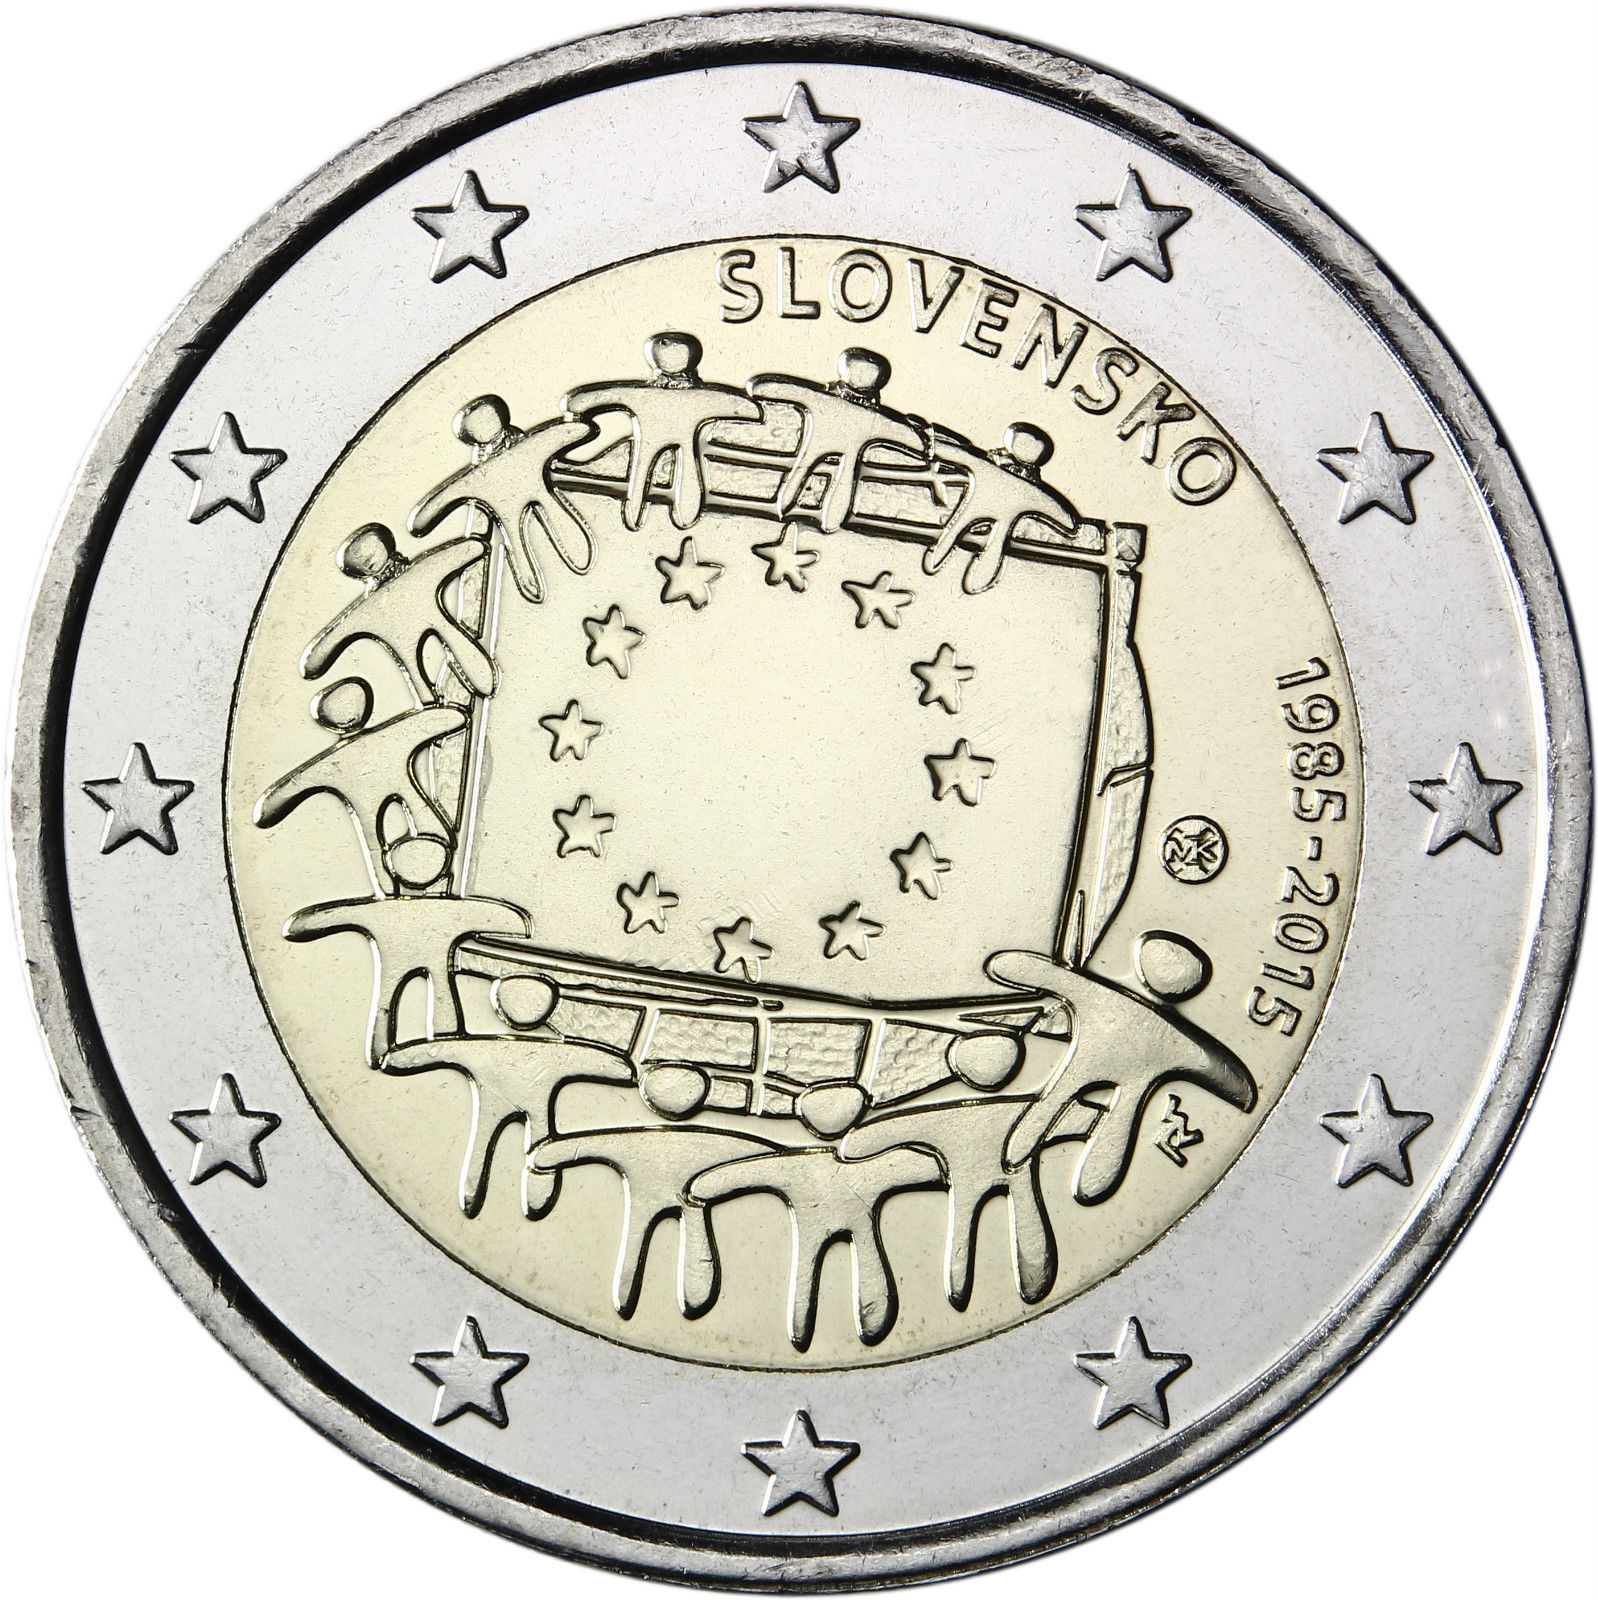 Slovenia 2 euro coin 2015 /"30th anniversary of the EU flag/" UNC